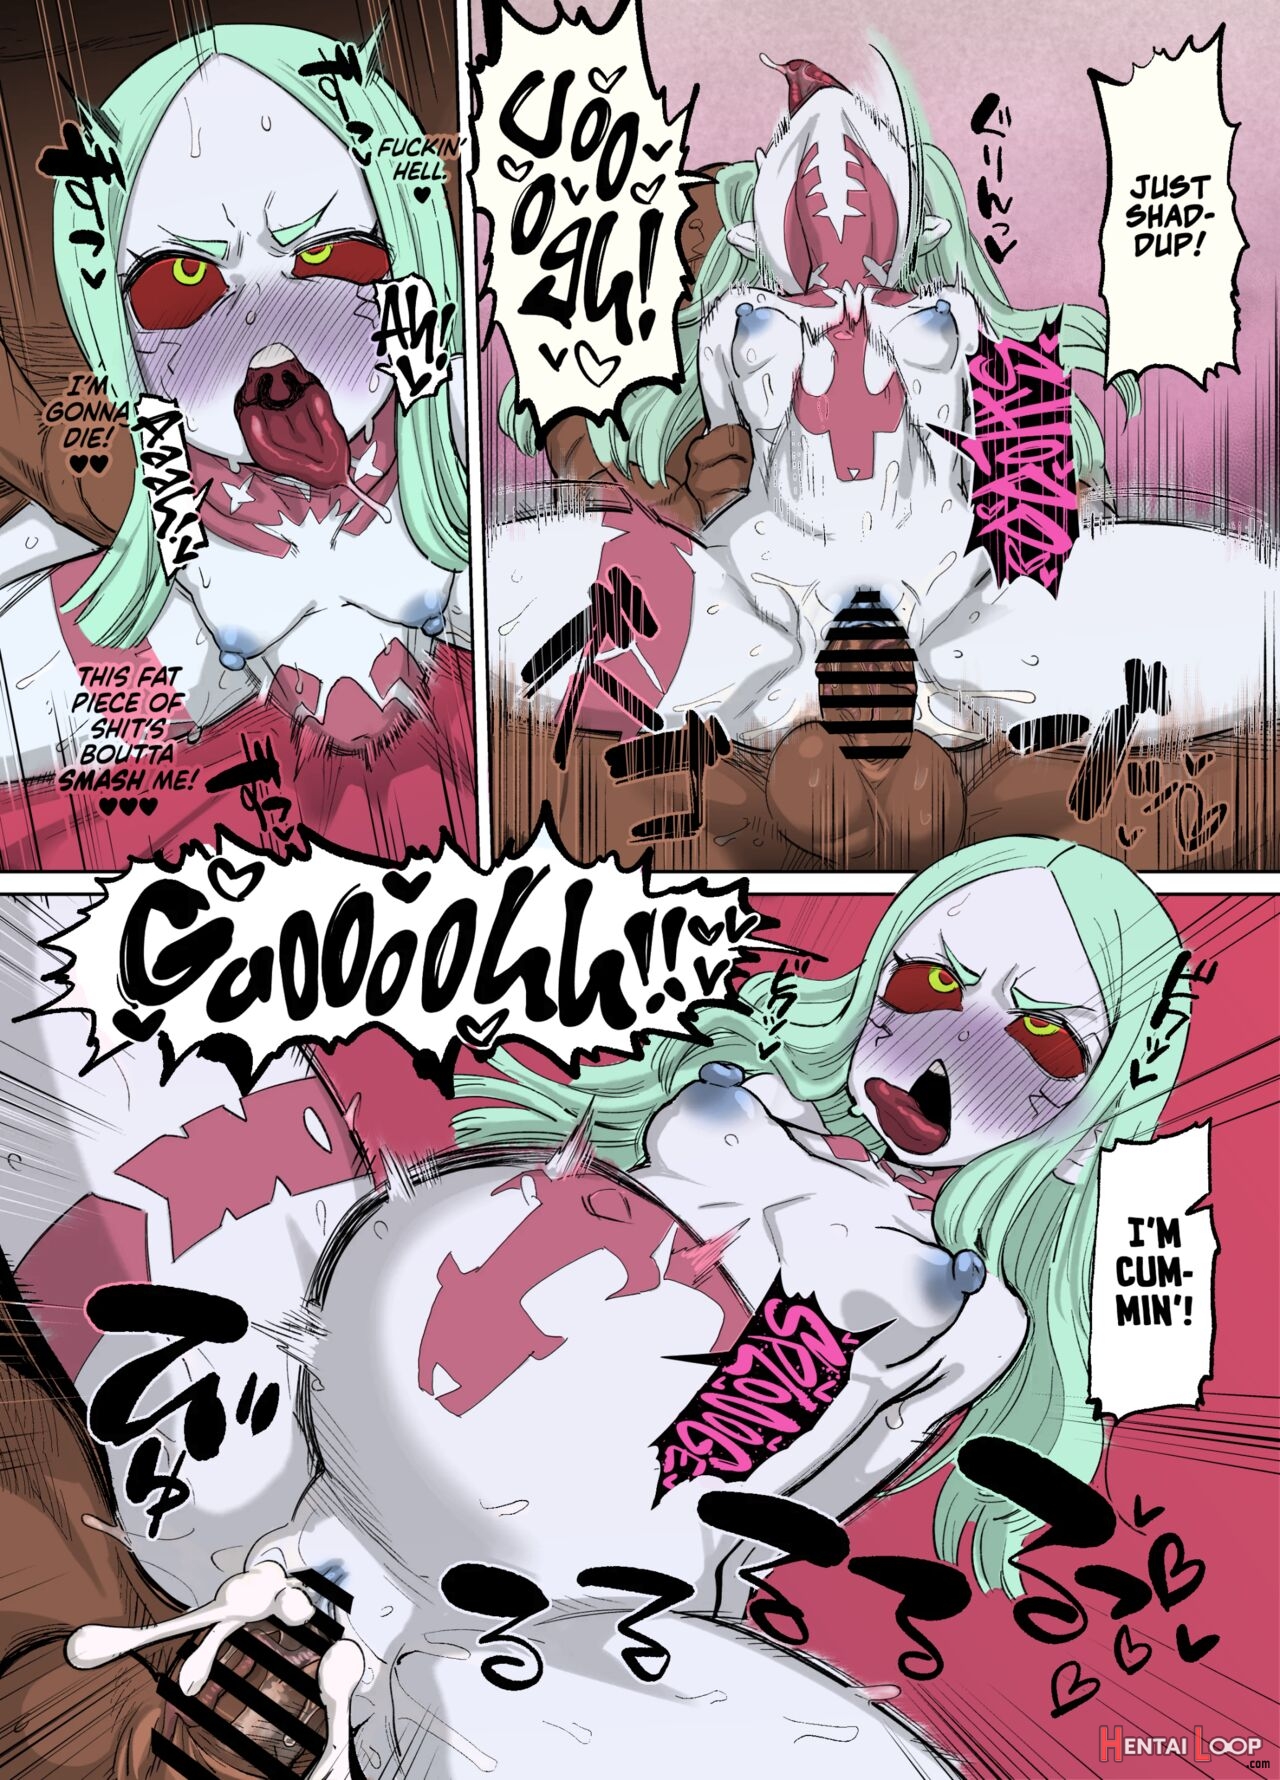 Rebecca-chan To Zukobako Manga - Colorized page 3